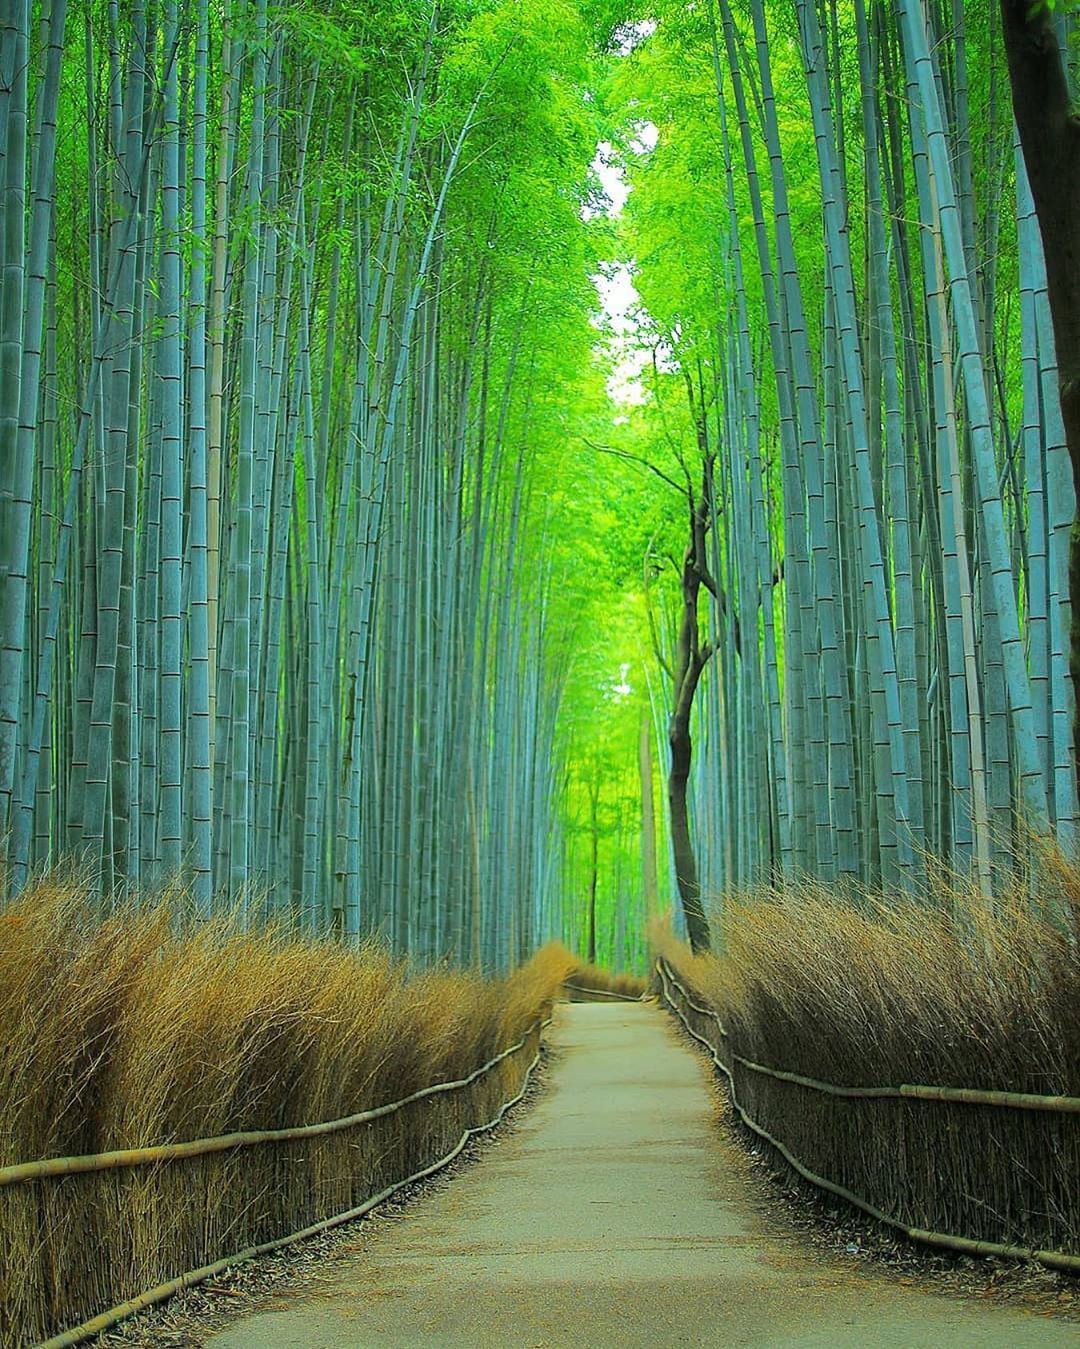 Retrip Kyoto Retrip 京都観光 今回ご紹介するのは 京都 嵐山の 竹林の小径 竹林が並び 綺麗 な新緑の中で自然を満喫できるスポットです 夜の神秘的な景色も 昼の Wacoca Japan People Life Style